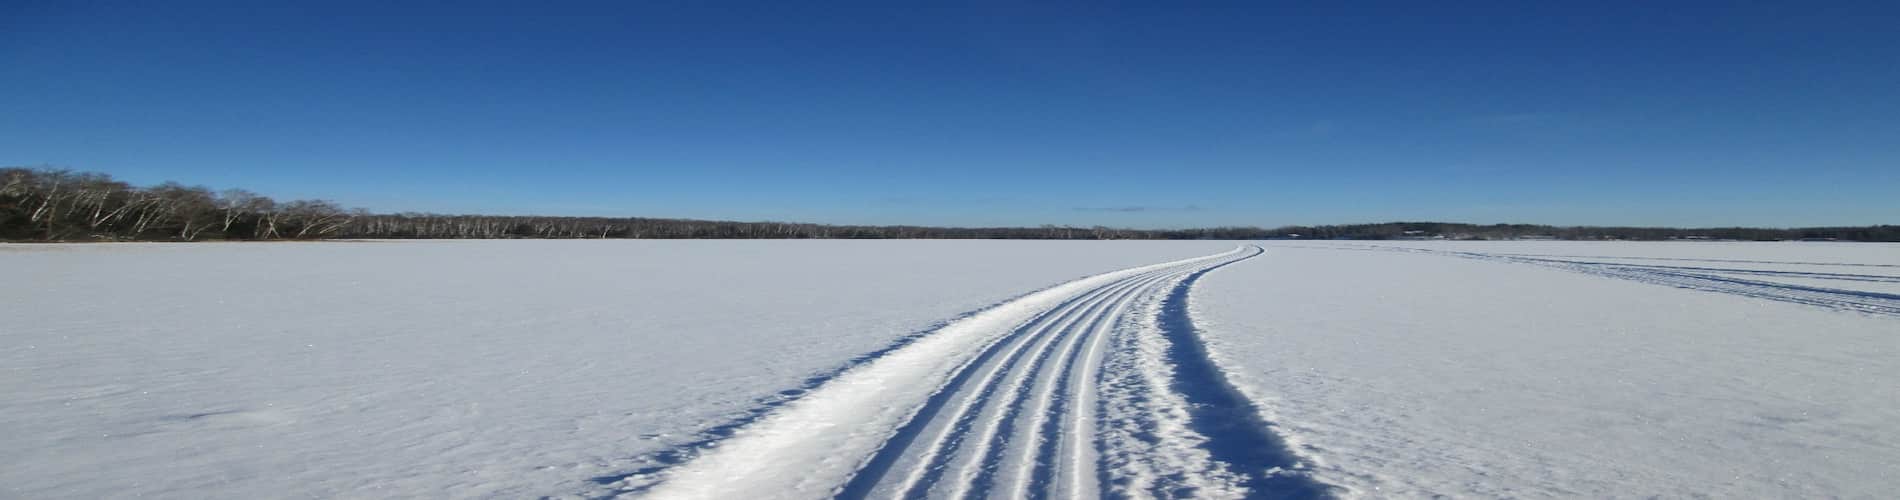 snowmobile-tracks-across-snow-covered-frozen-lake